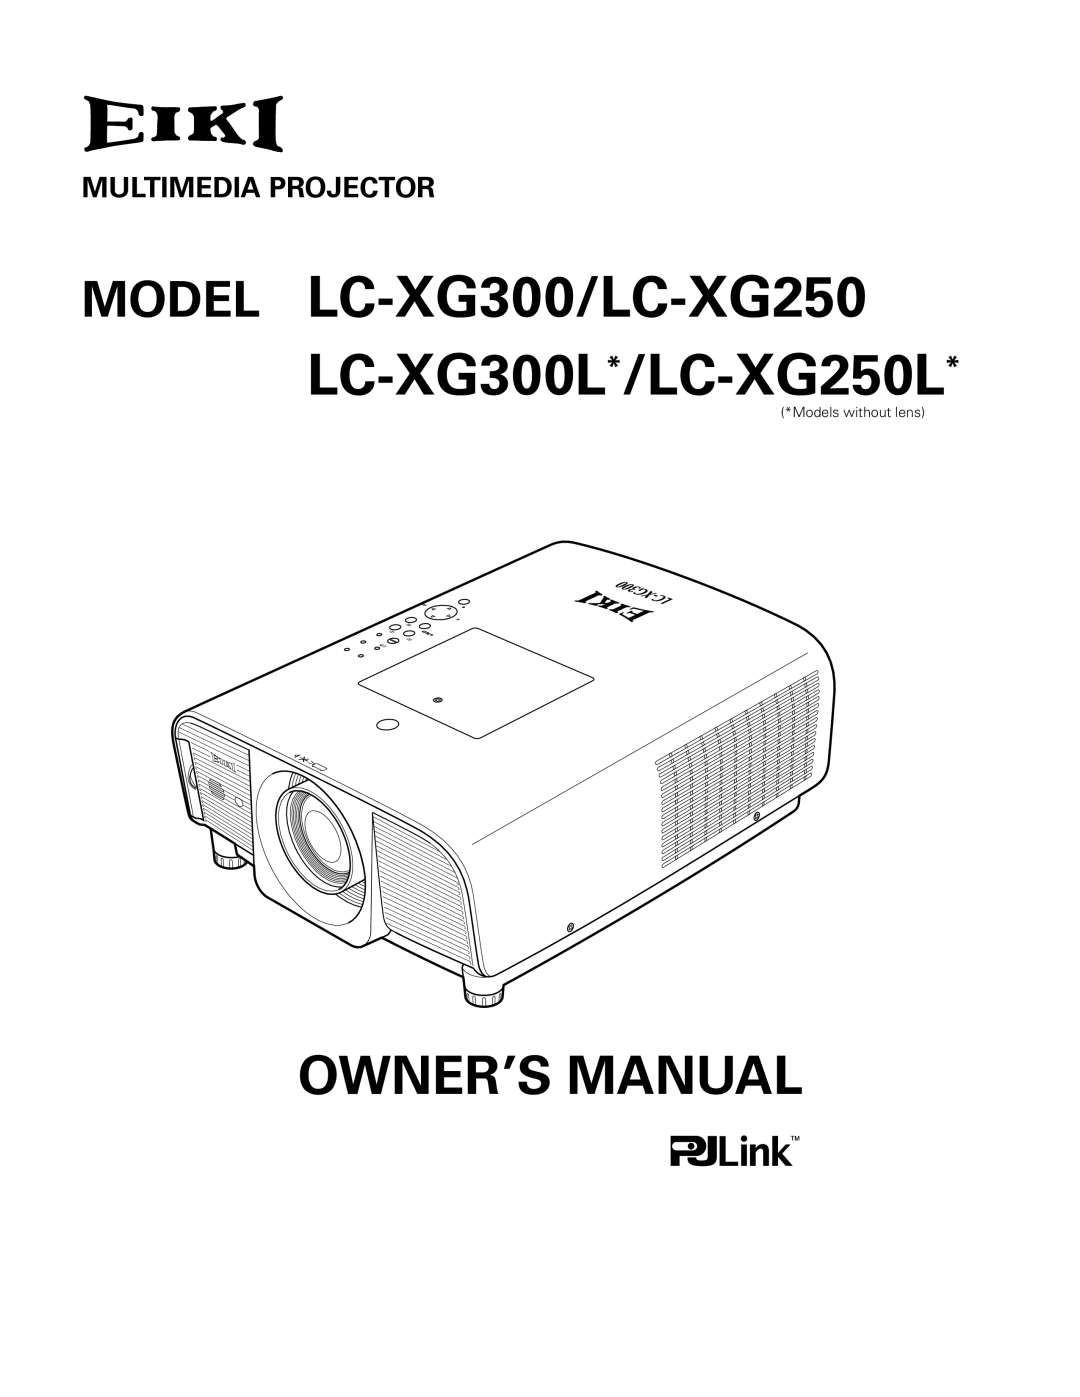 Eiki owner manual Multimedia Projector, MODEL LC-XG300/LC-XG250 LC-XG300L*/LC-XG250L, Owner’S Manual 